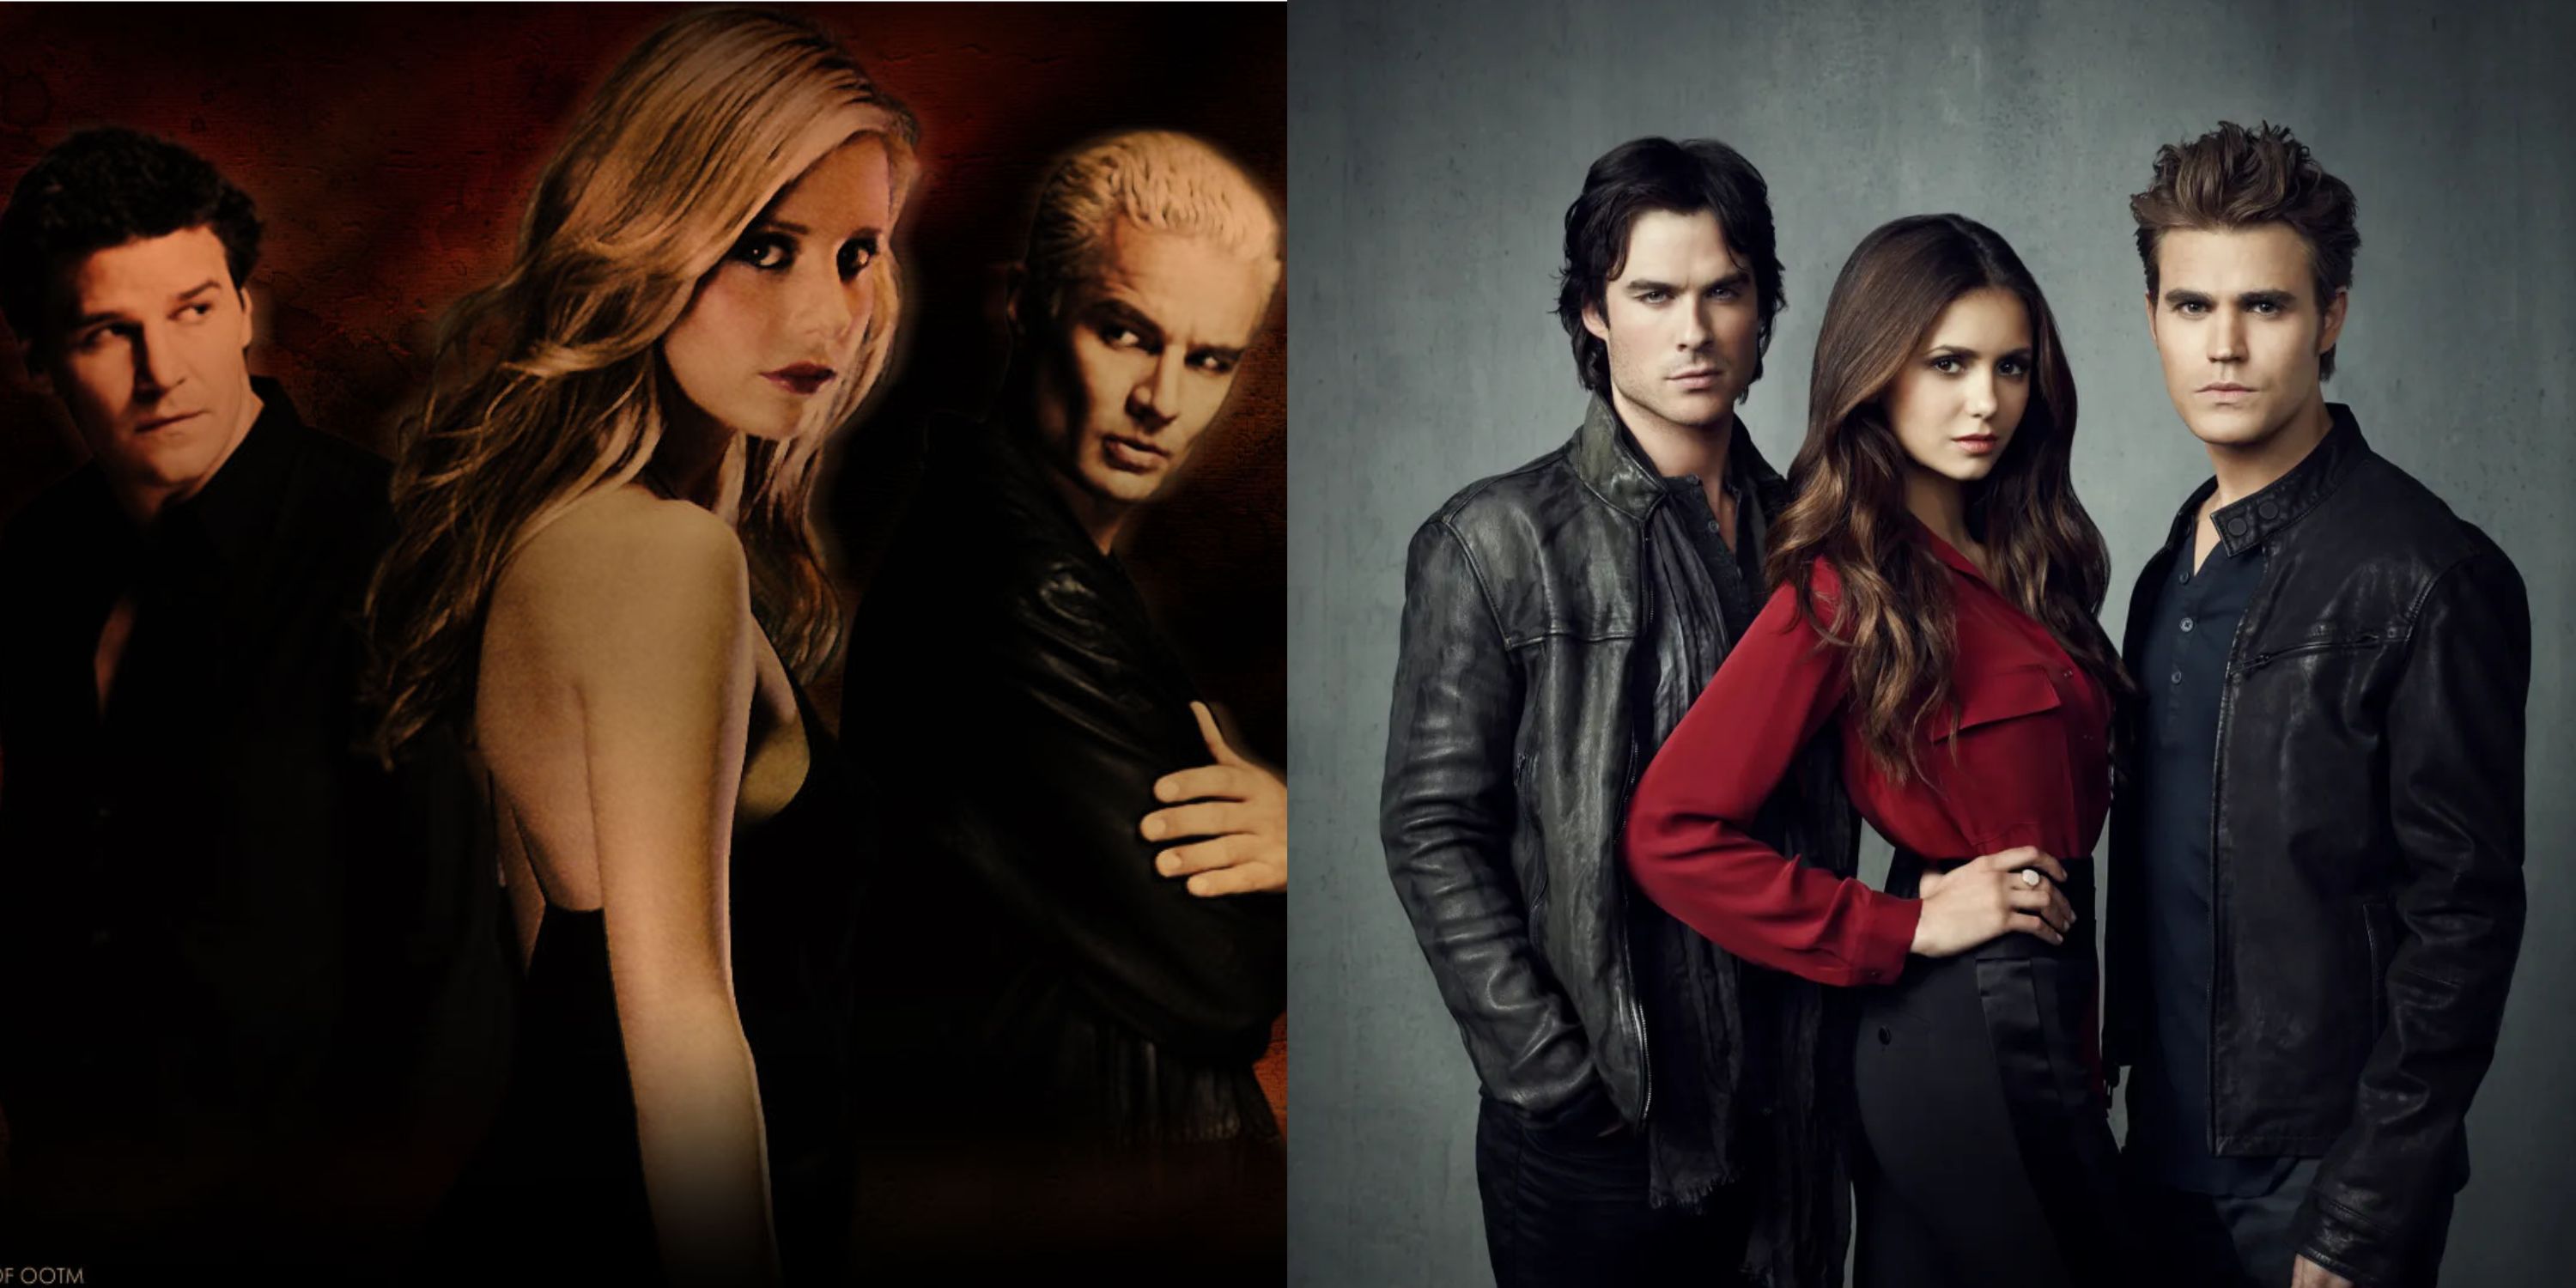 Buffy, Spike, Angel in Buffy the Vampire Slayer and Elena, Damon, Stefan in TVD